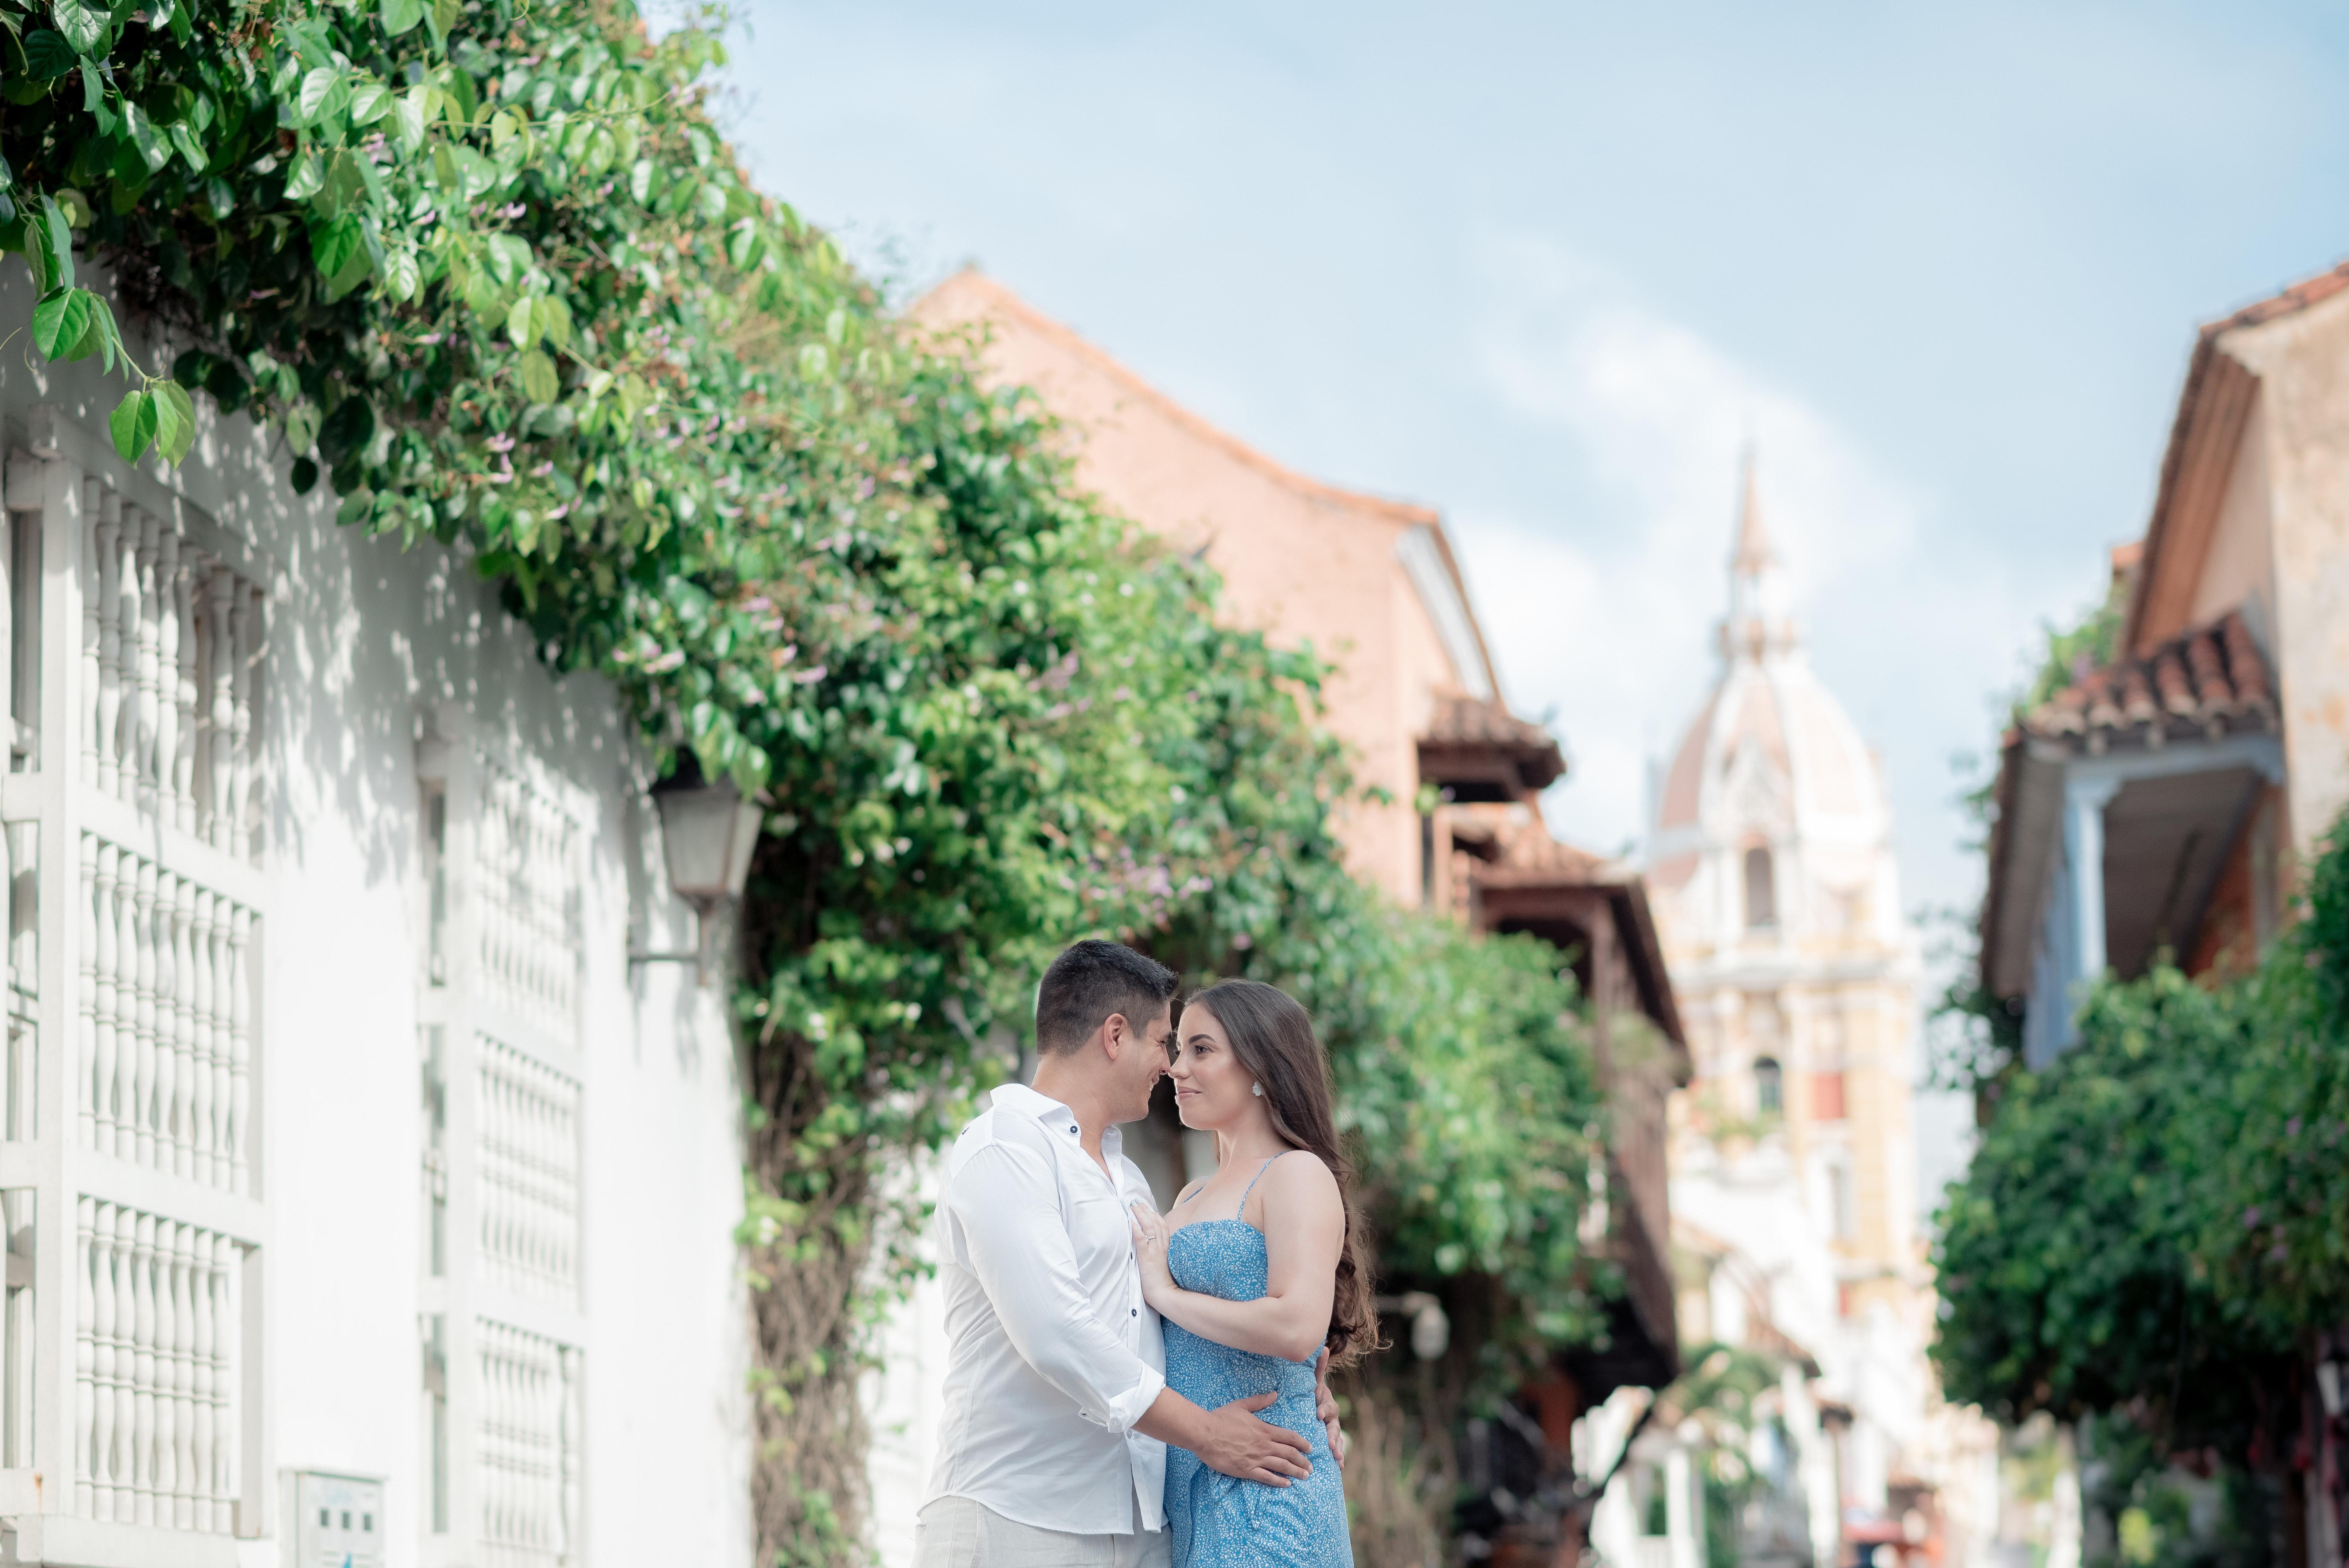 The Wedding Website of Jessica Bonet and Miguel Uzcategui